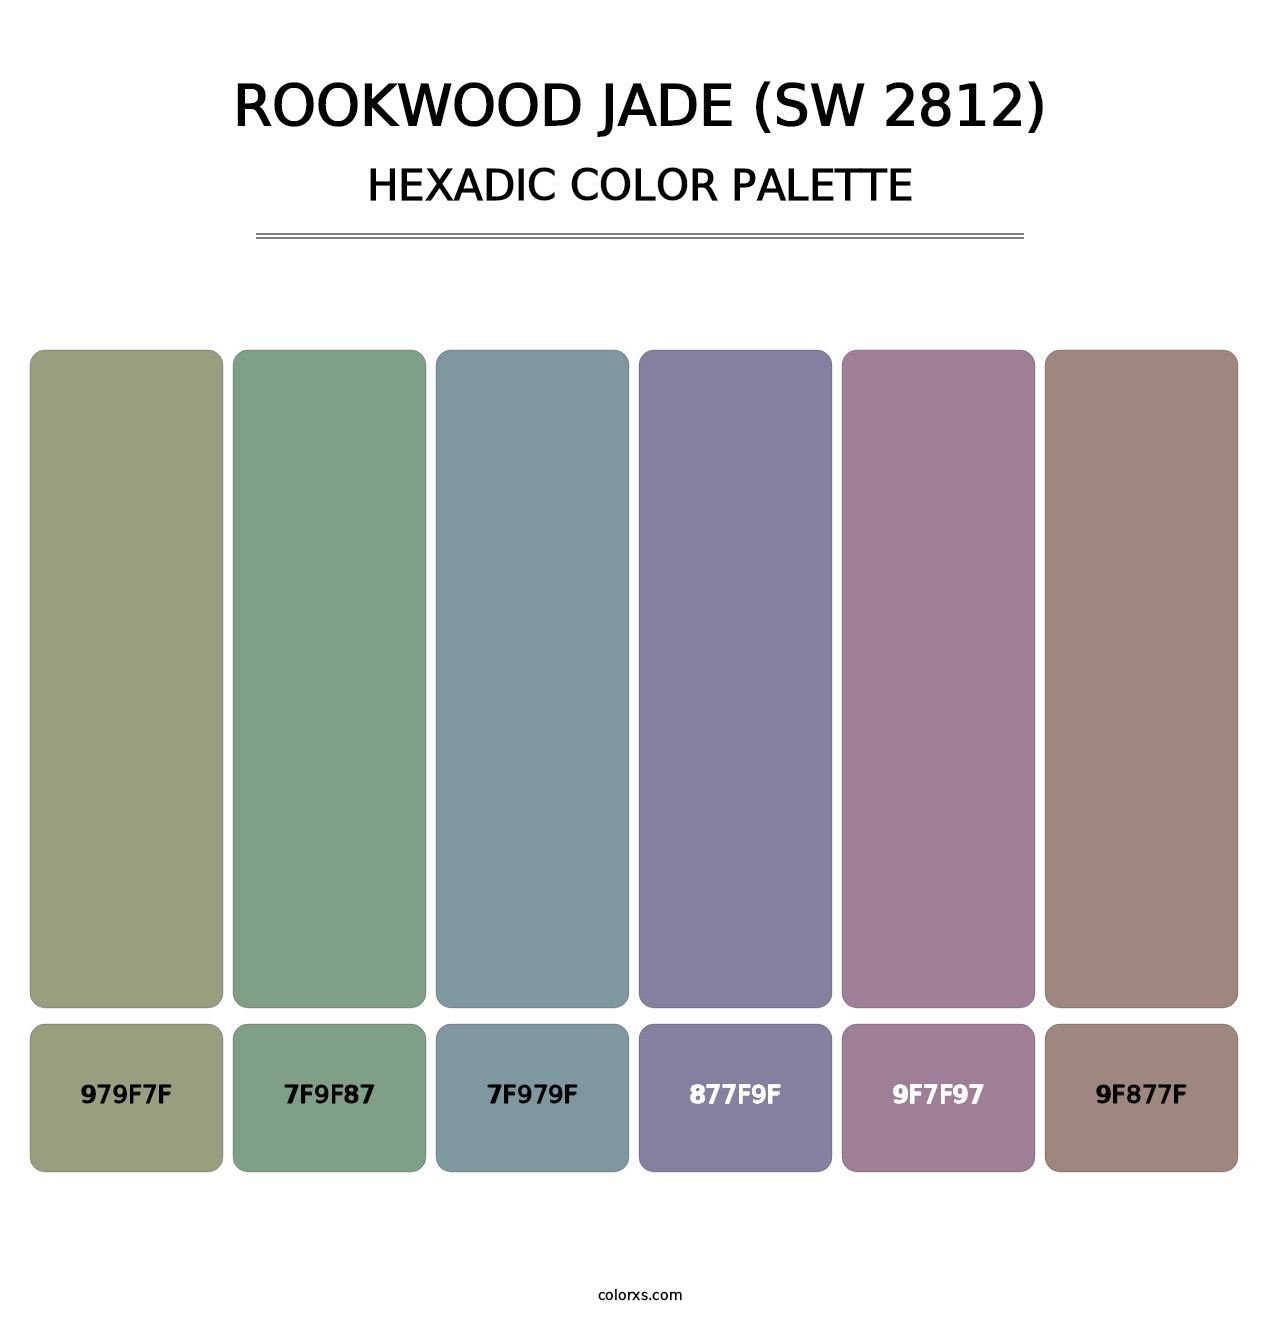 Rookwood Jade (SW 2812) - Hexadic Color Palette